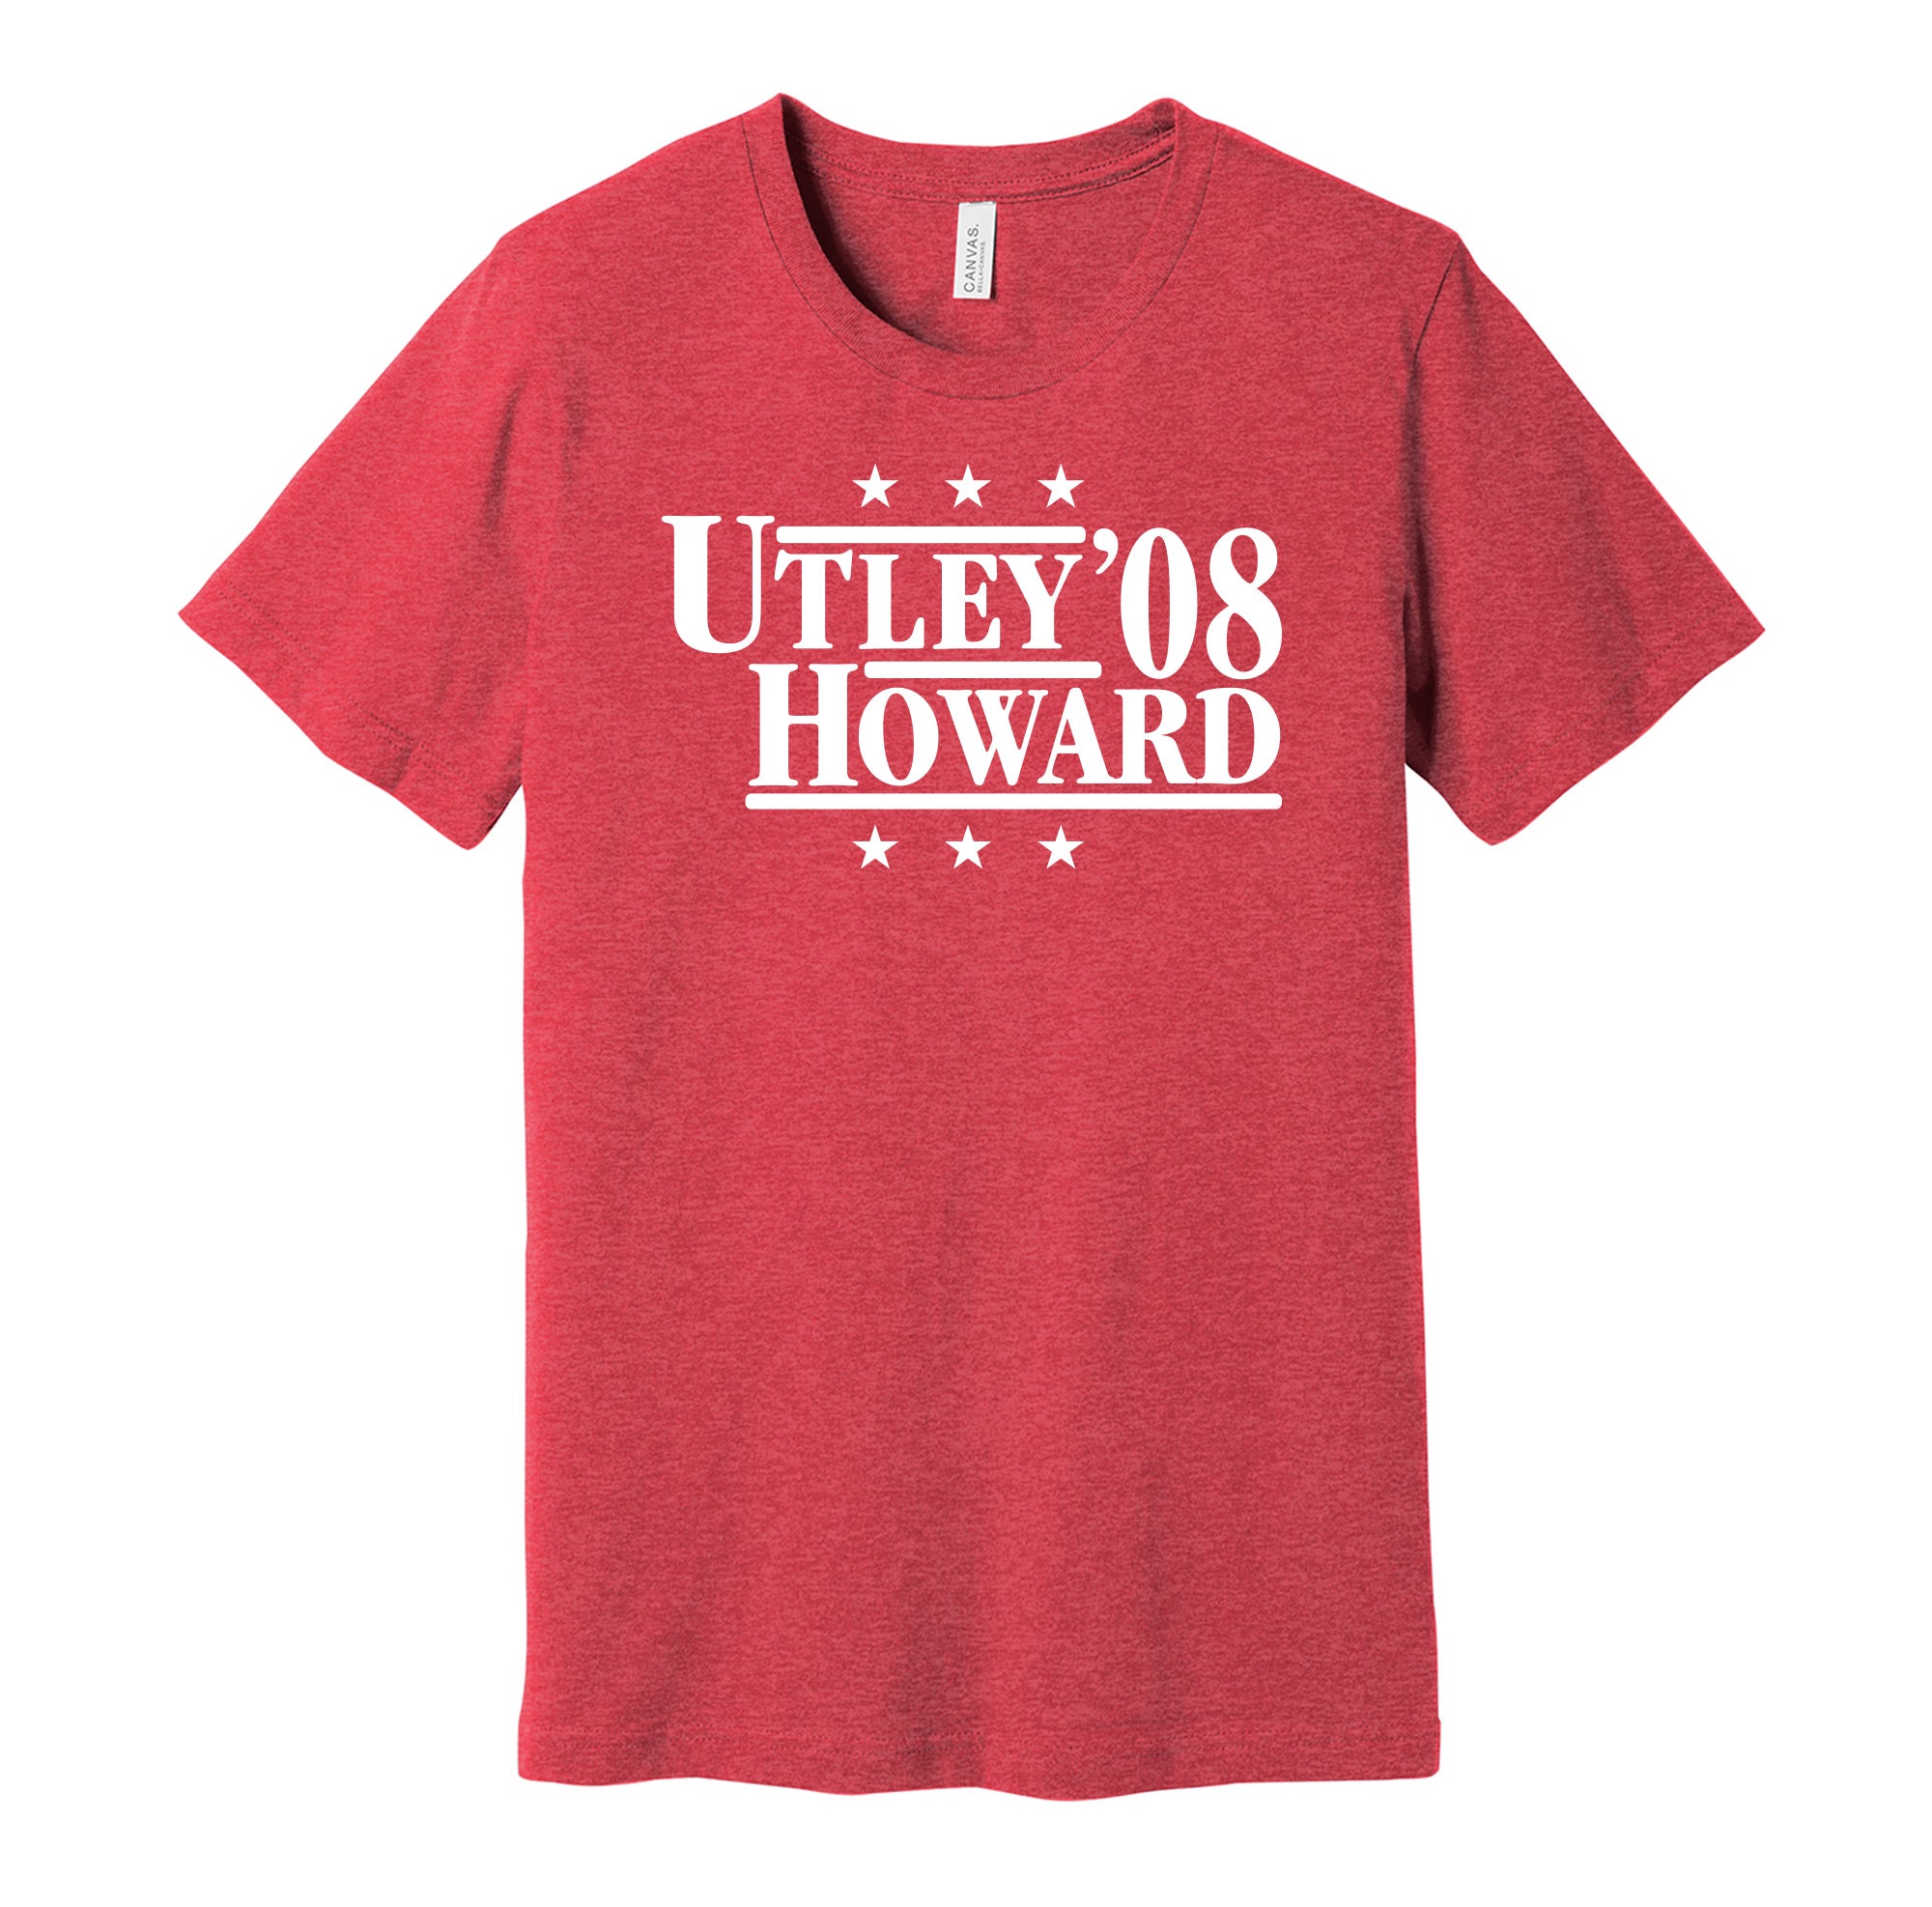 Utley & Howard '08 - Philadelphia Baseball Legends Political Campaign Parody T-Shirt - Hyper Than Hype Shirts XS / Red Shirt